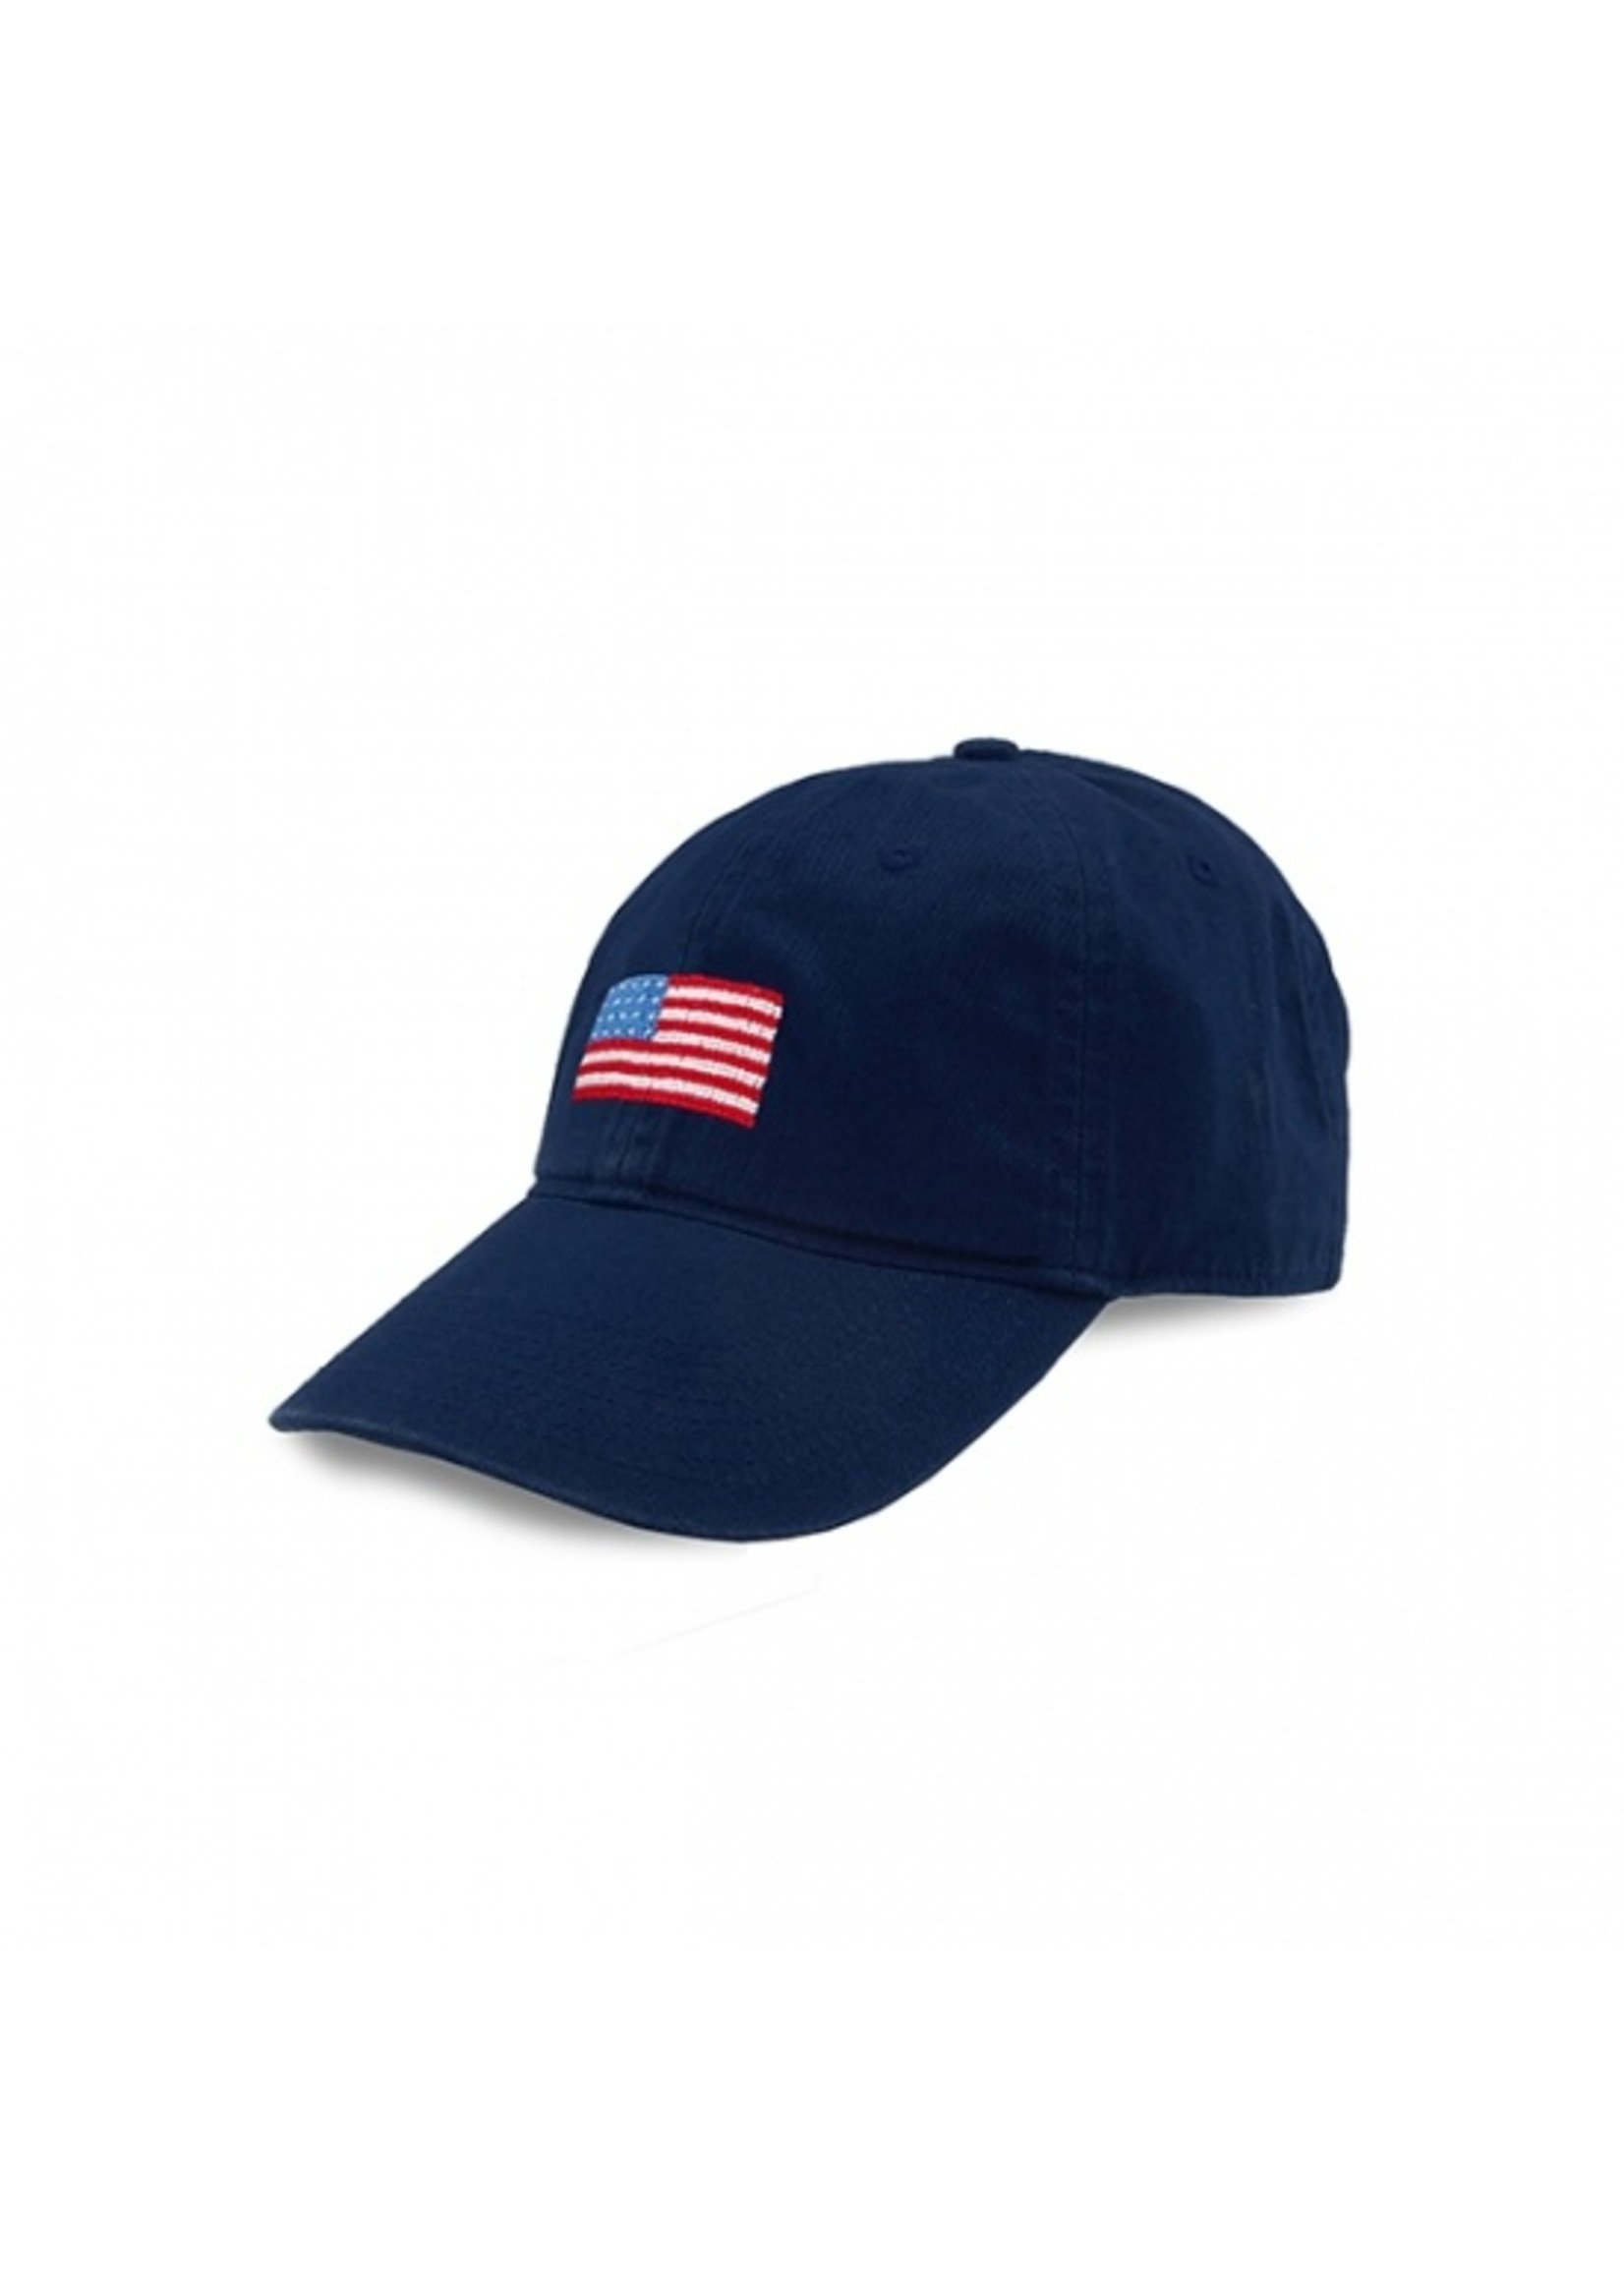 Smathers & Branson Hat American Flag (Navy)